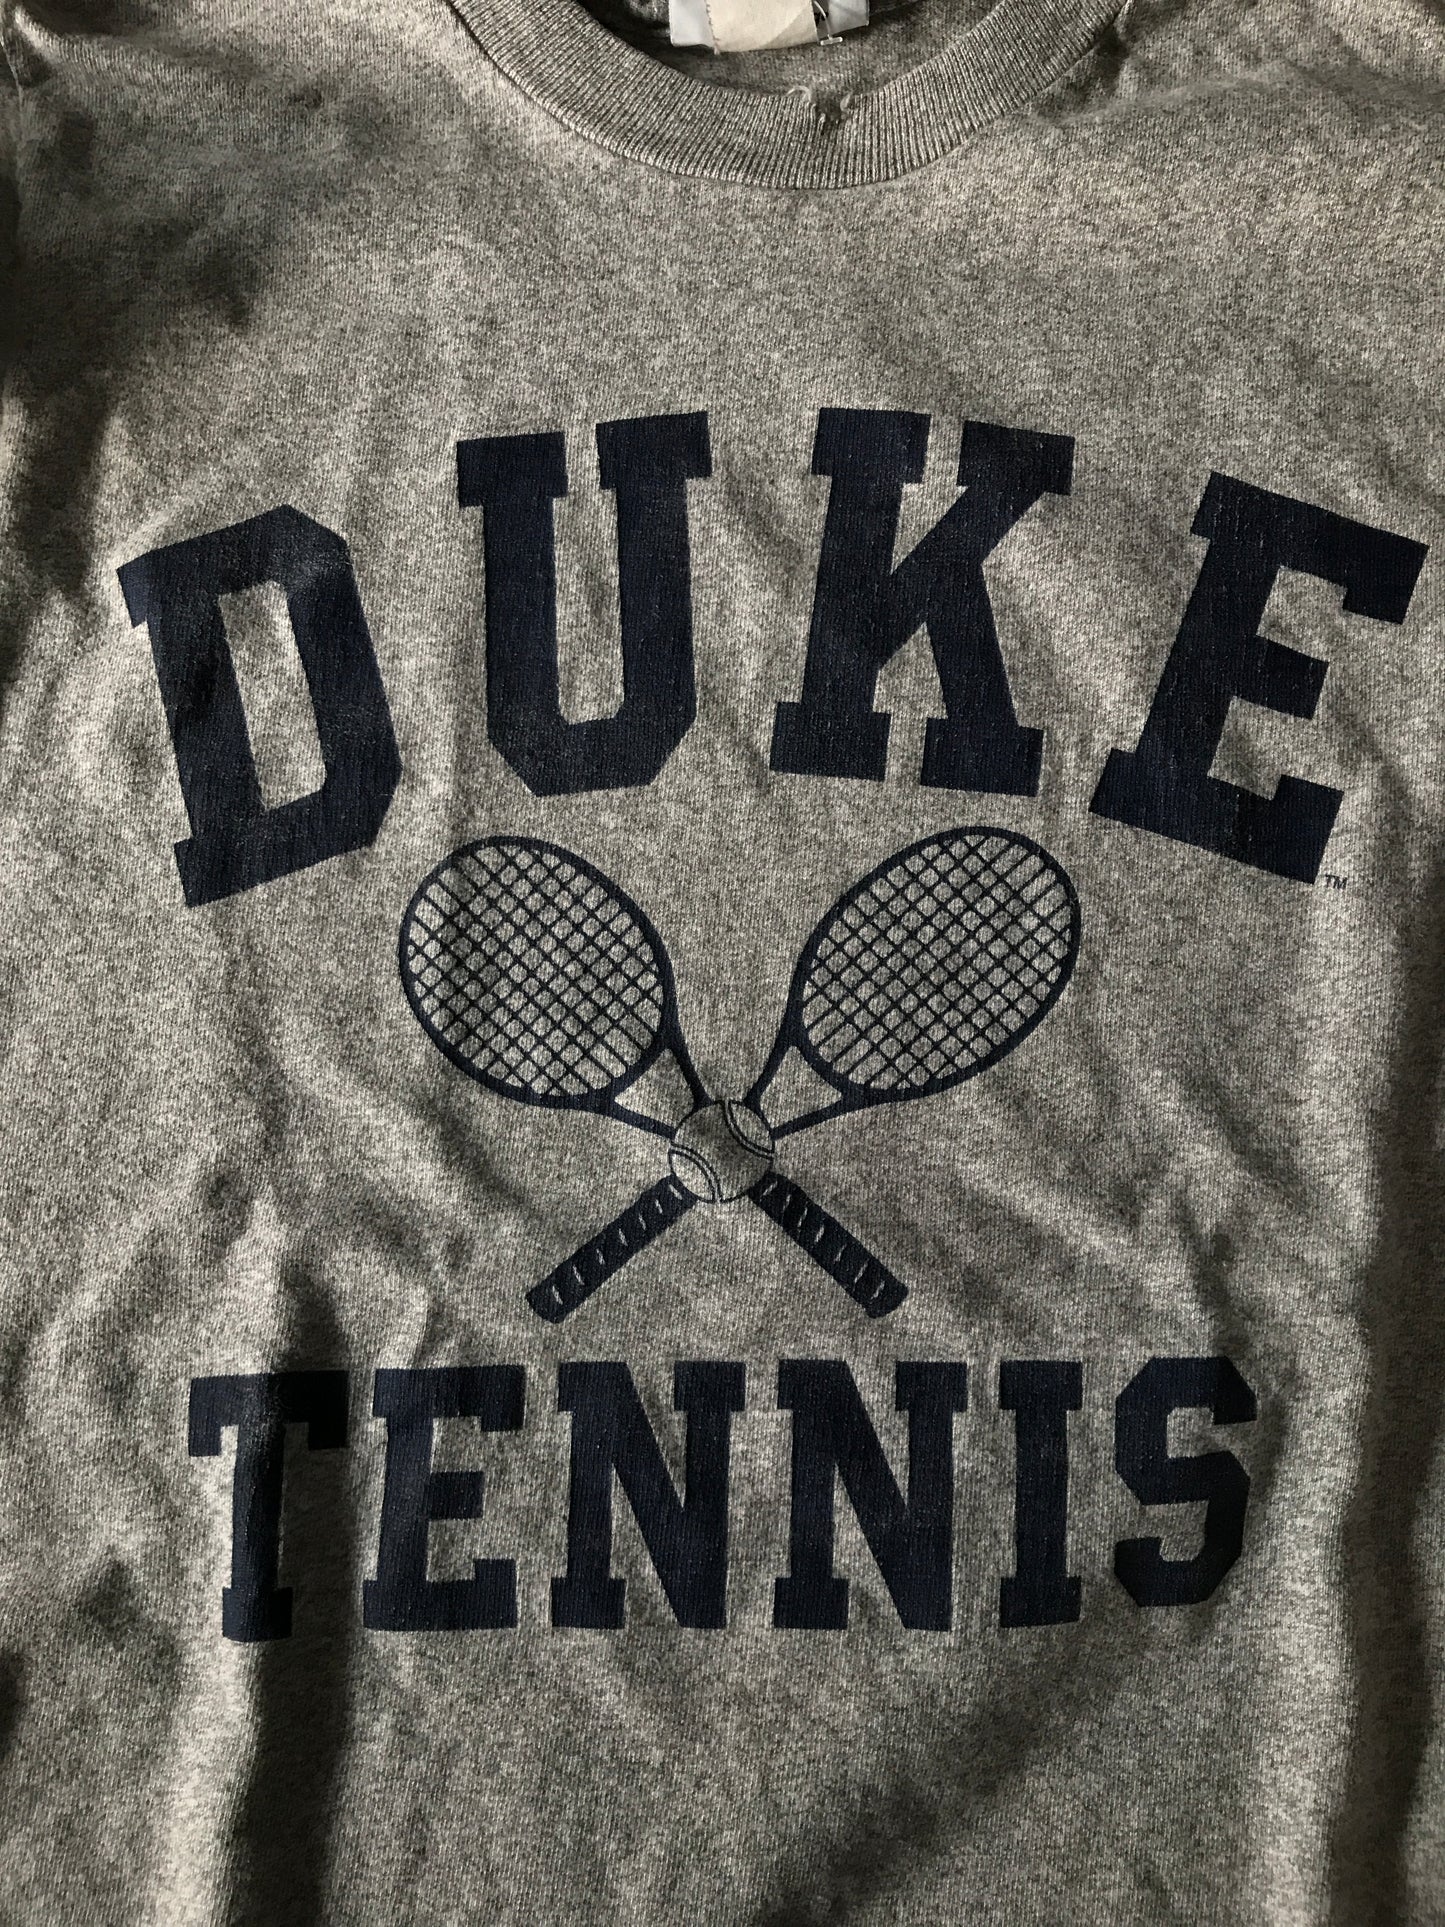 Playera Duke Tennis Vintage